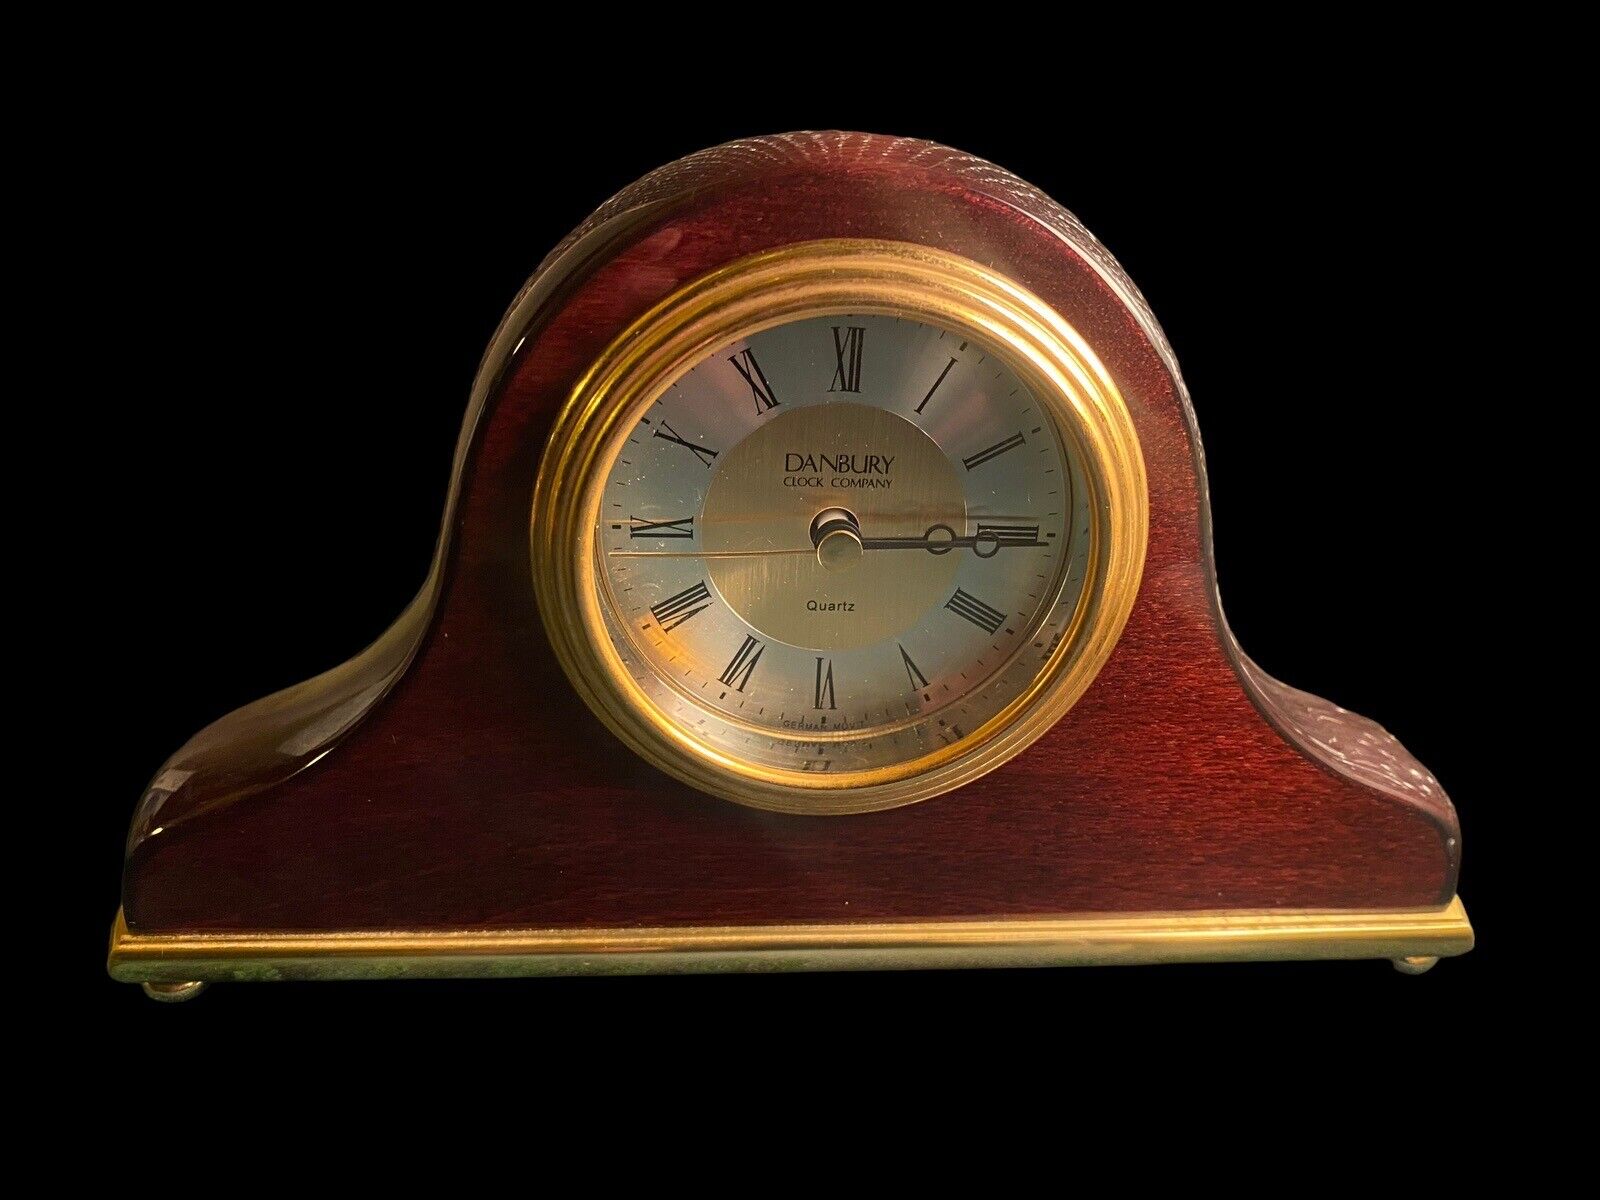 Vintage Danbury Quartz Desk/Mantel Clock In Cherry Wood.  Beautiful And Accurate